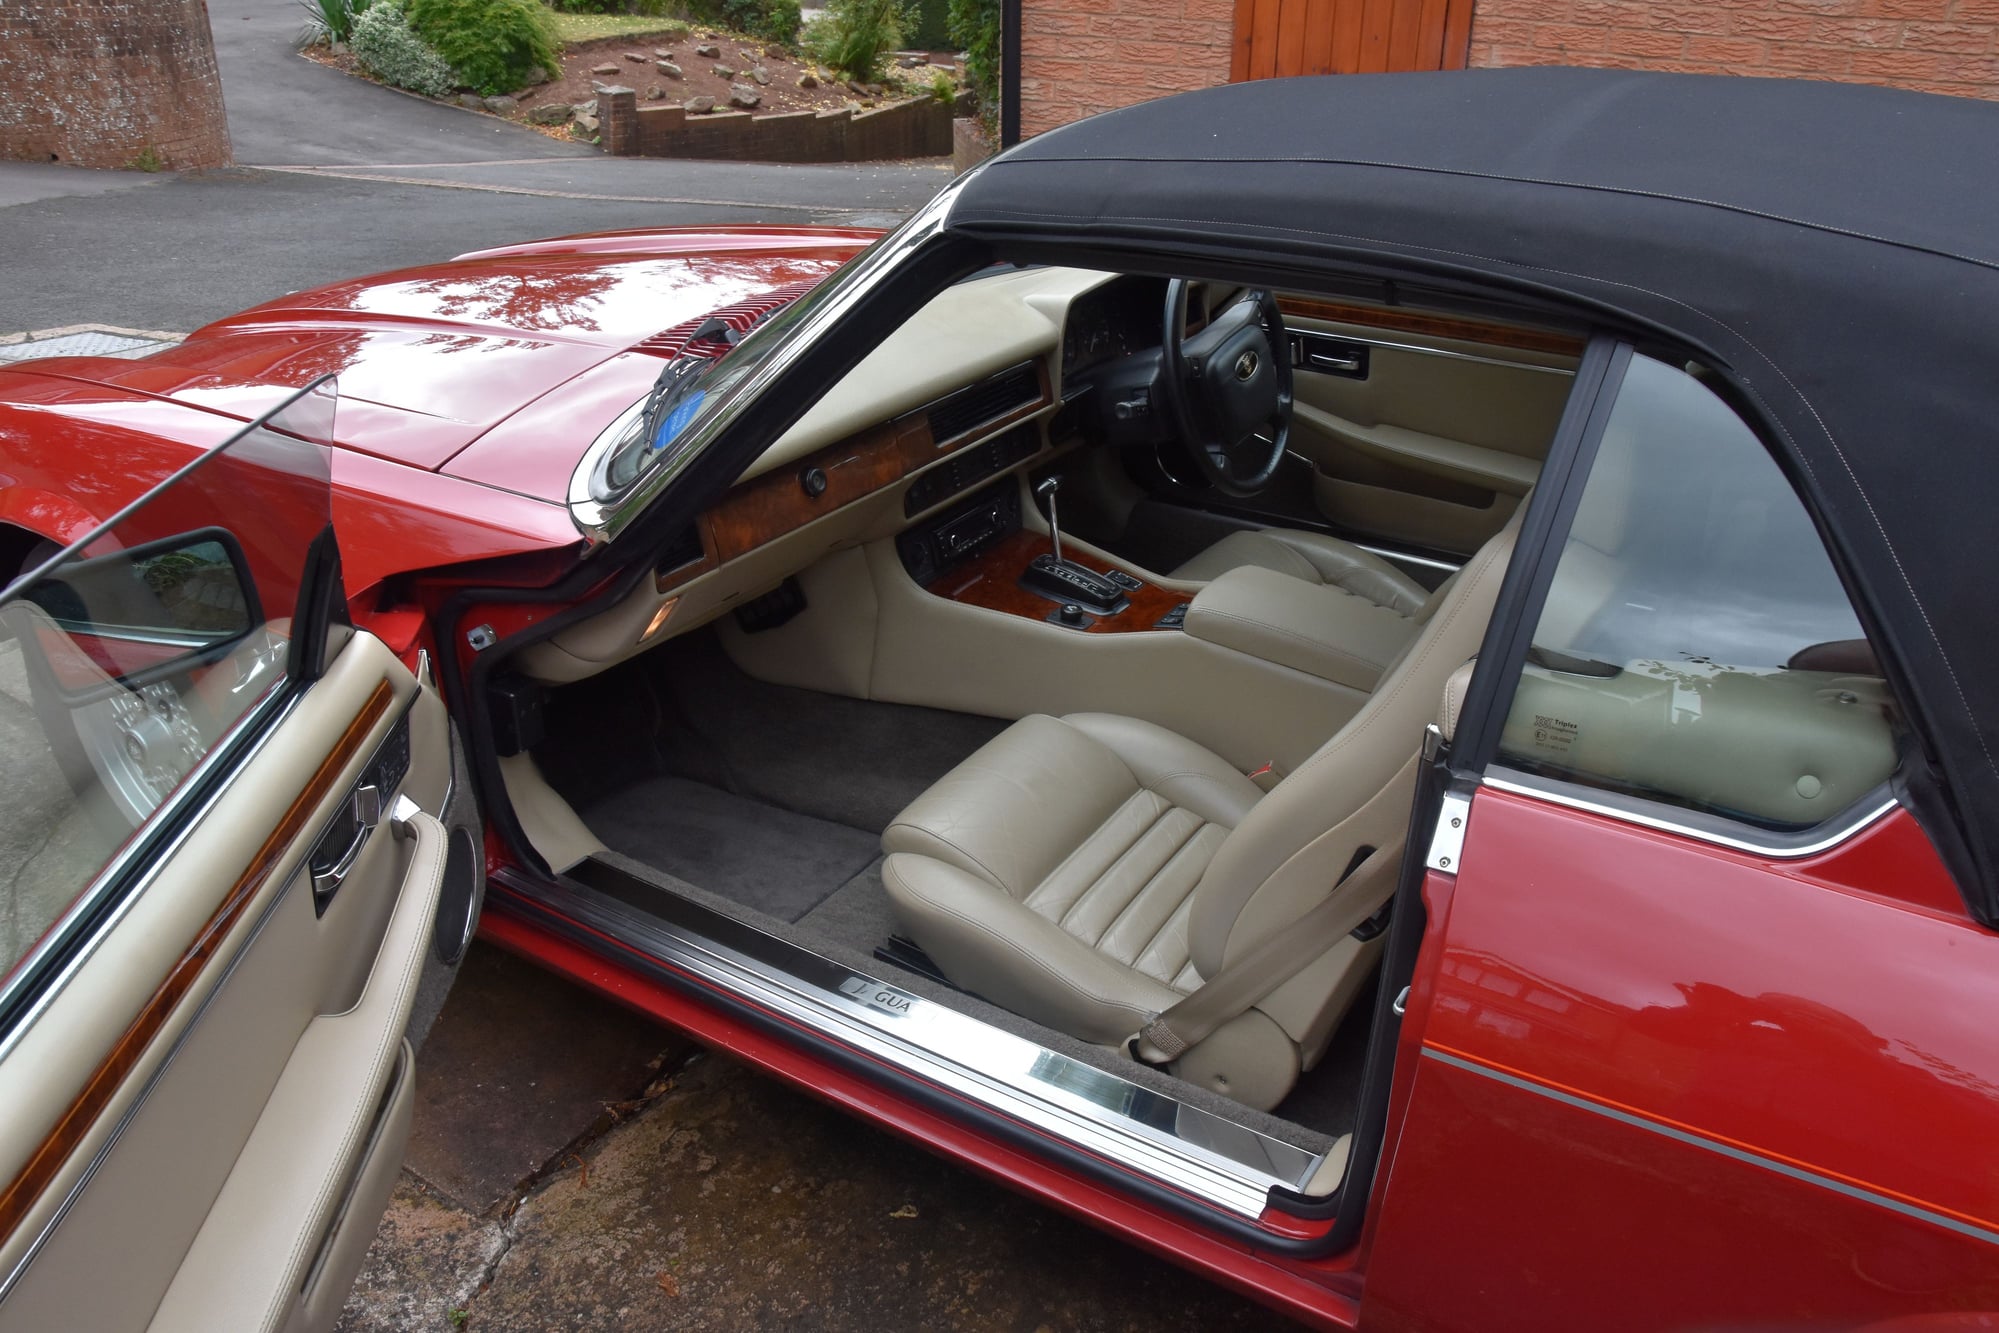 1993 Jaguar XJS - 1993 Jaguar XJS 5.3 V12 Convertible - Mechanically Restored - Outstanding - Used - VIN SAJJNJDW3EP182547 - 70,000 Miles - 12 cyl - 2WD - Automatic - Convertible - Red - Birmingham B388, United Kingdom